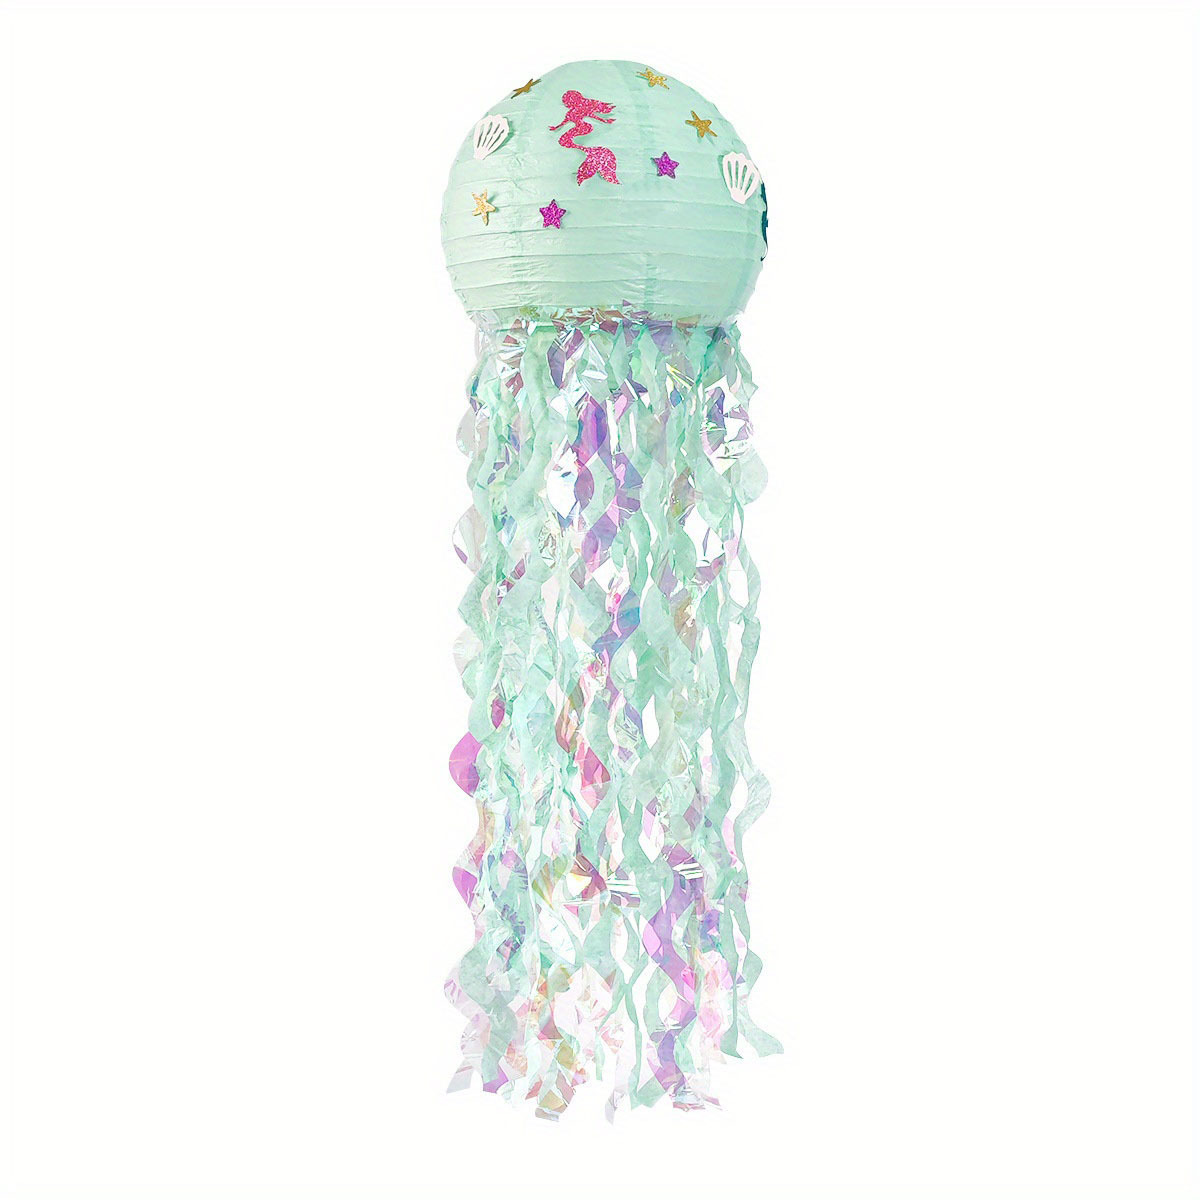 Jellyfish Fieldmermaid Jellyfish Paper Lantern For Party